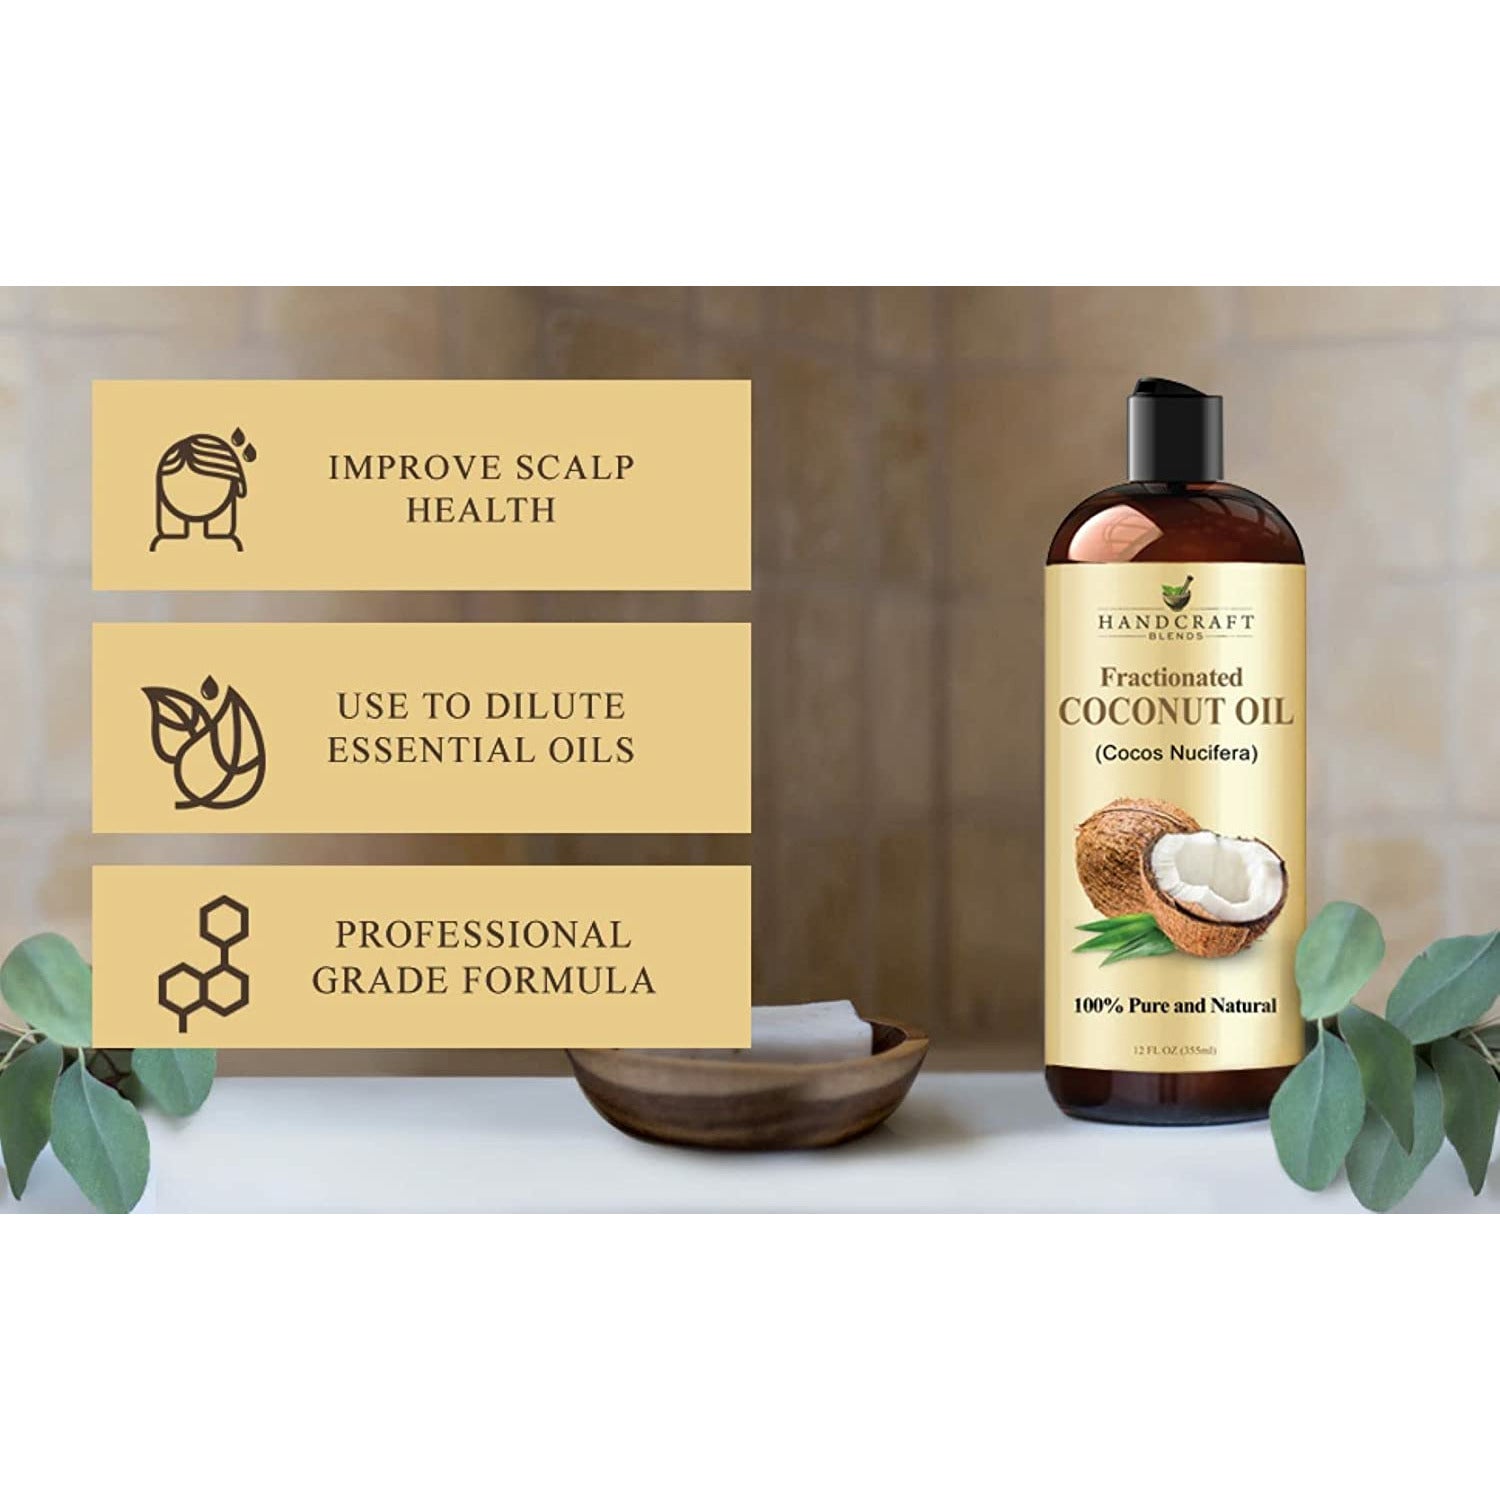 Handcraft Fractionated Coconut Oil - 100% Pure & Natural Premium Grade Coconut Carrier Oil for Essential Oils, Massage Oil, Moisturizing Hair Oil & B